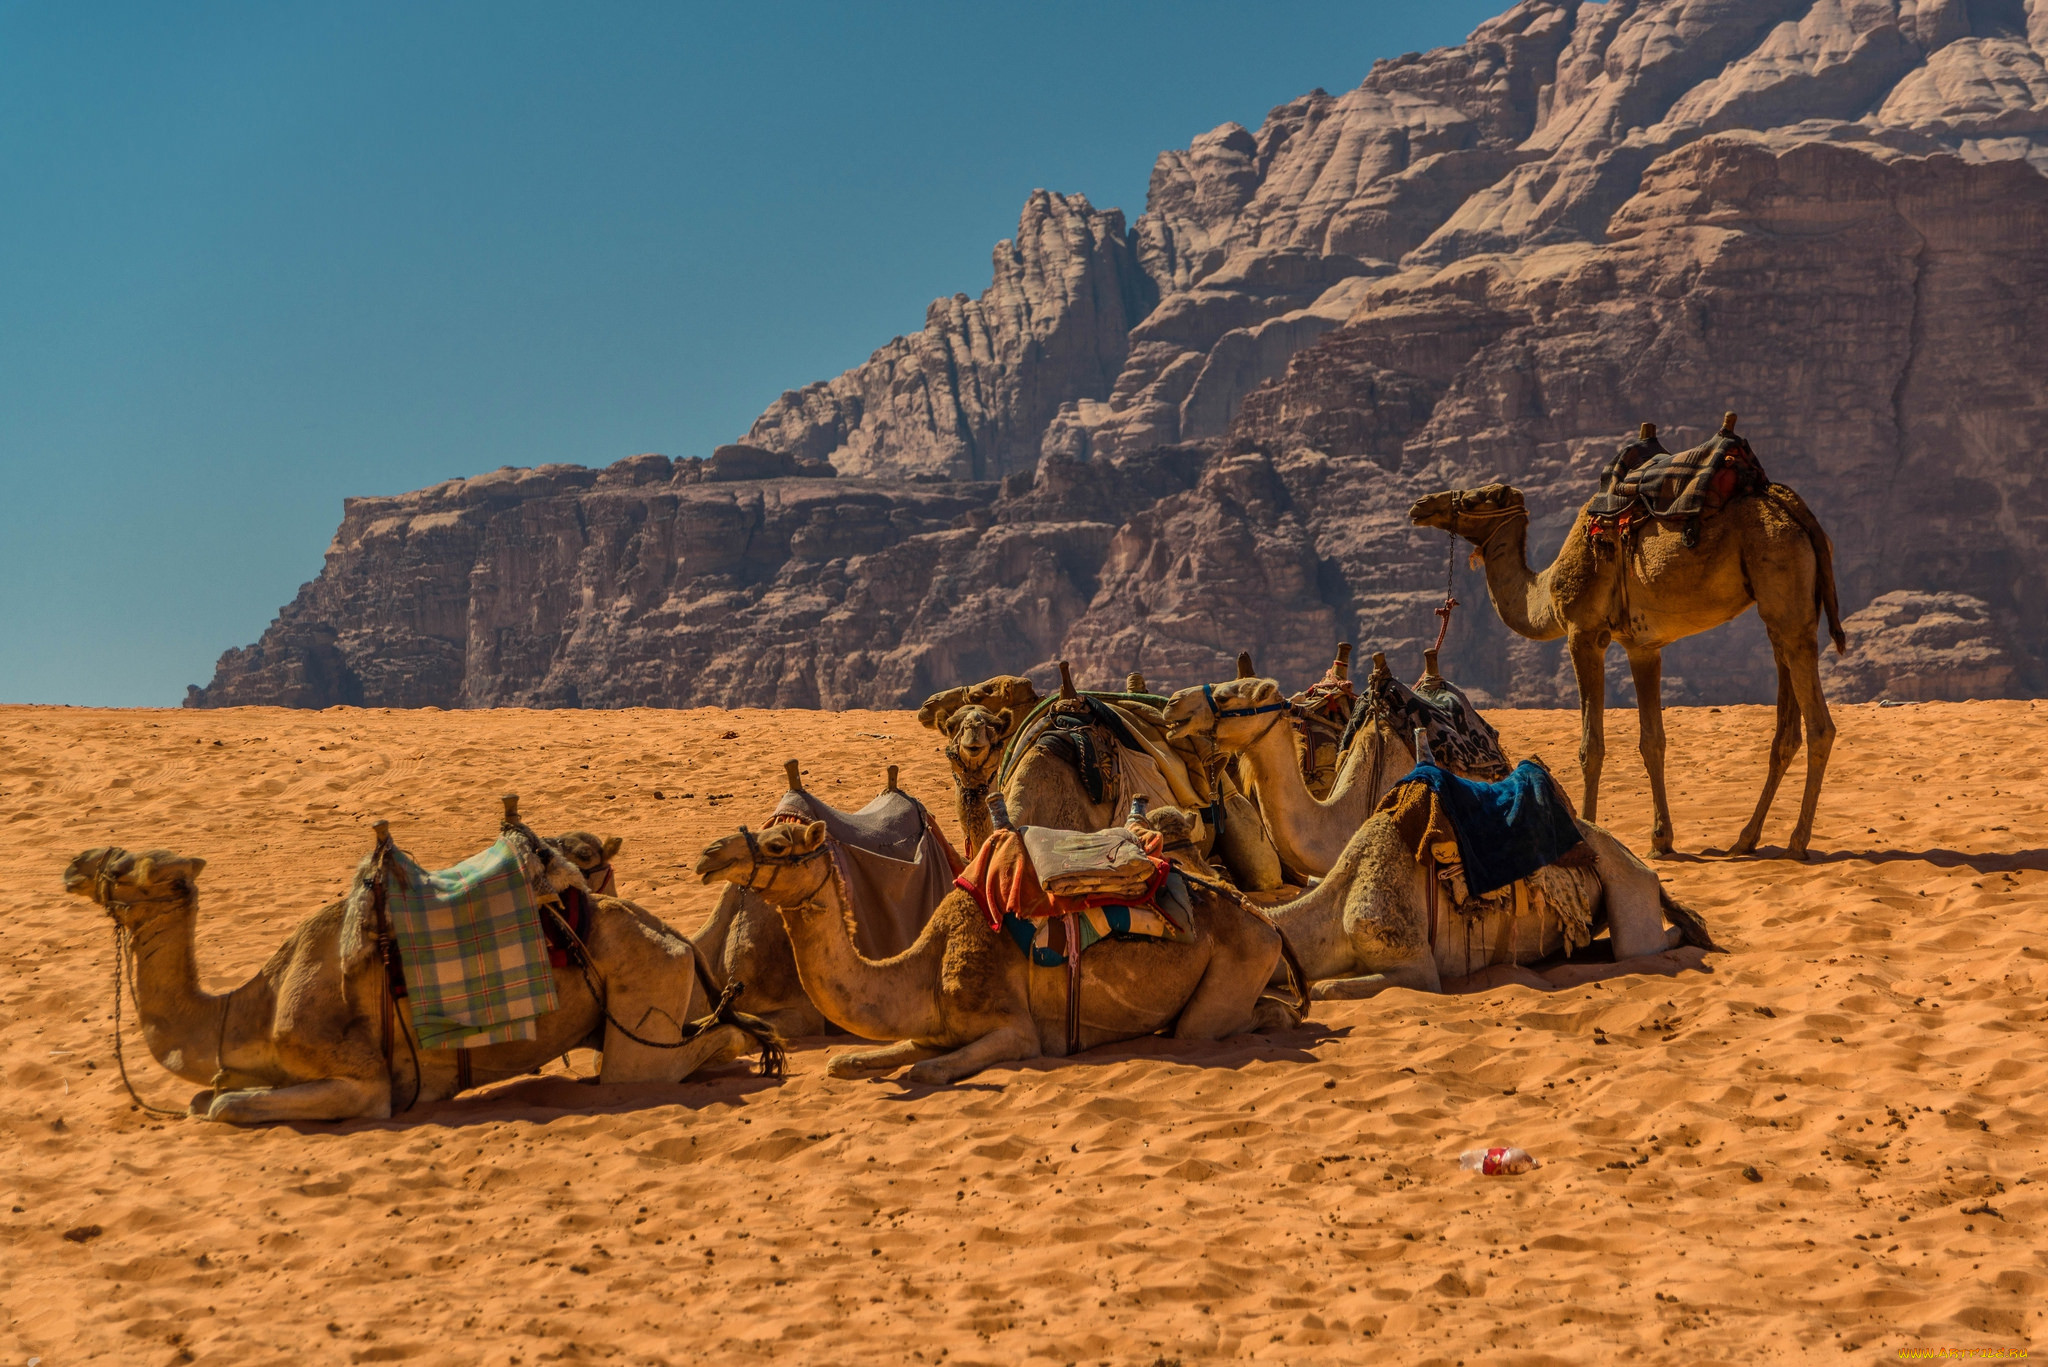 Хатуб караван. Верблюд Караван пустыни. Мехари верблюд. Караван с верблюдами в пустыне. Караван верблюдов в пустыне.